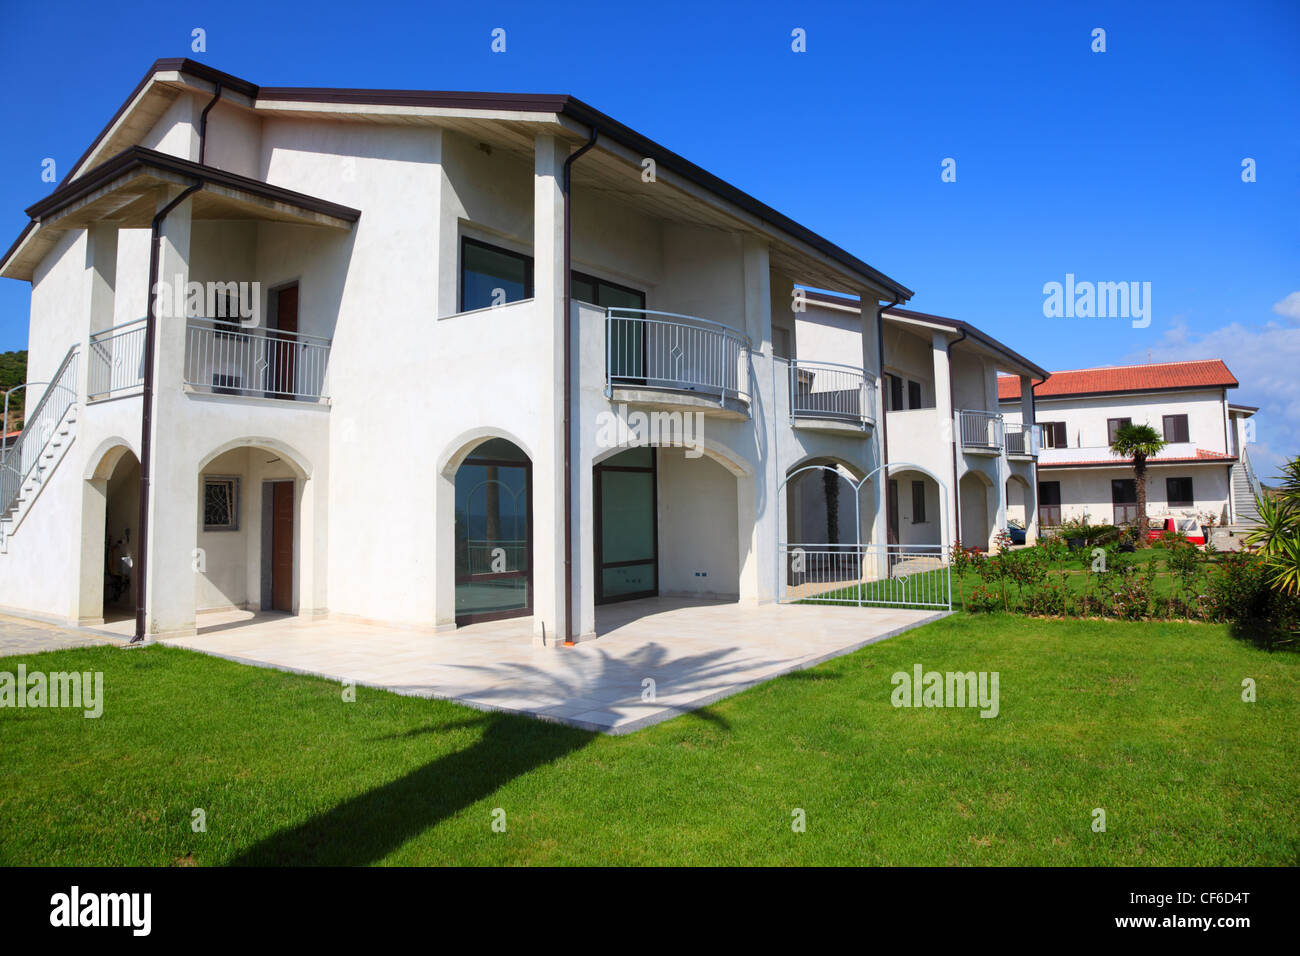 Casa blanca de dos pisos fotografías e imágenes de alta resolución - Alamy